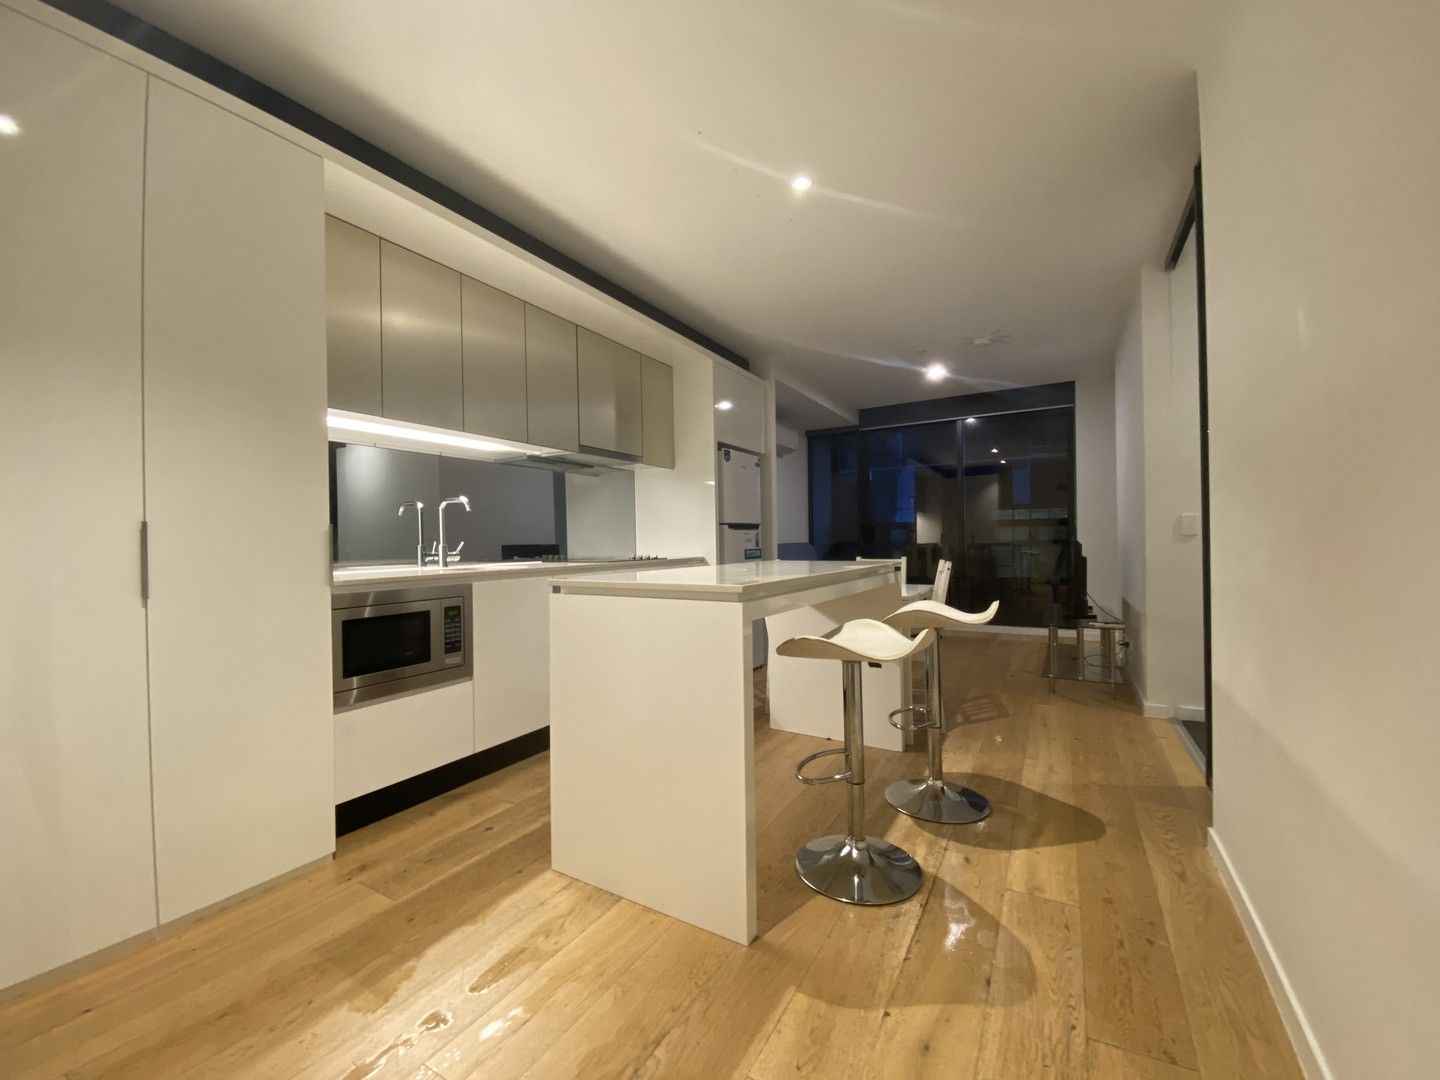 2 bedrooms Apartment / Unit / Flat in 4609/33 Rose Lane MELBOURNE VIC, 3000